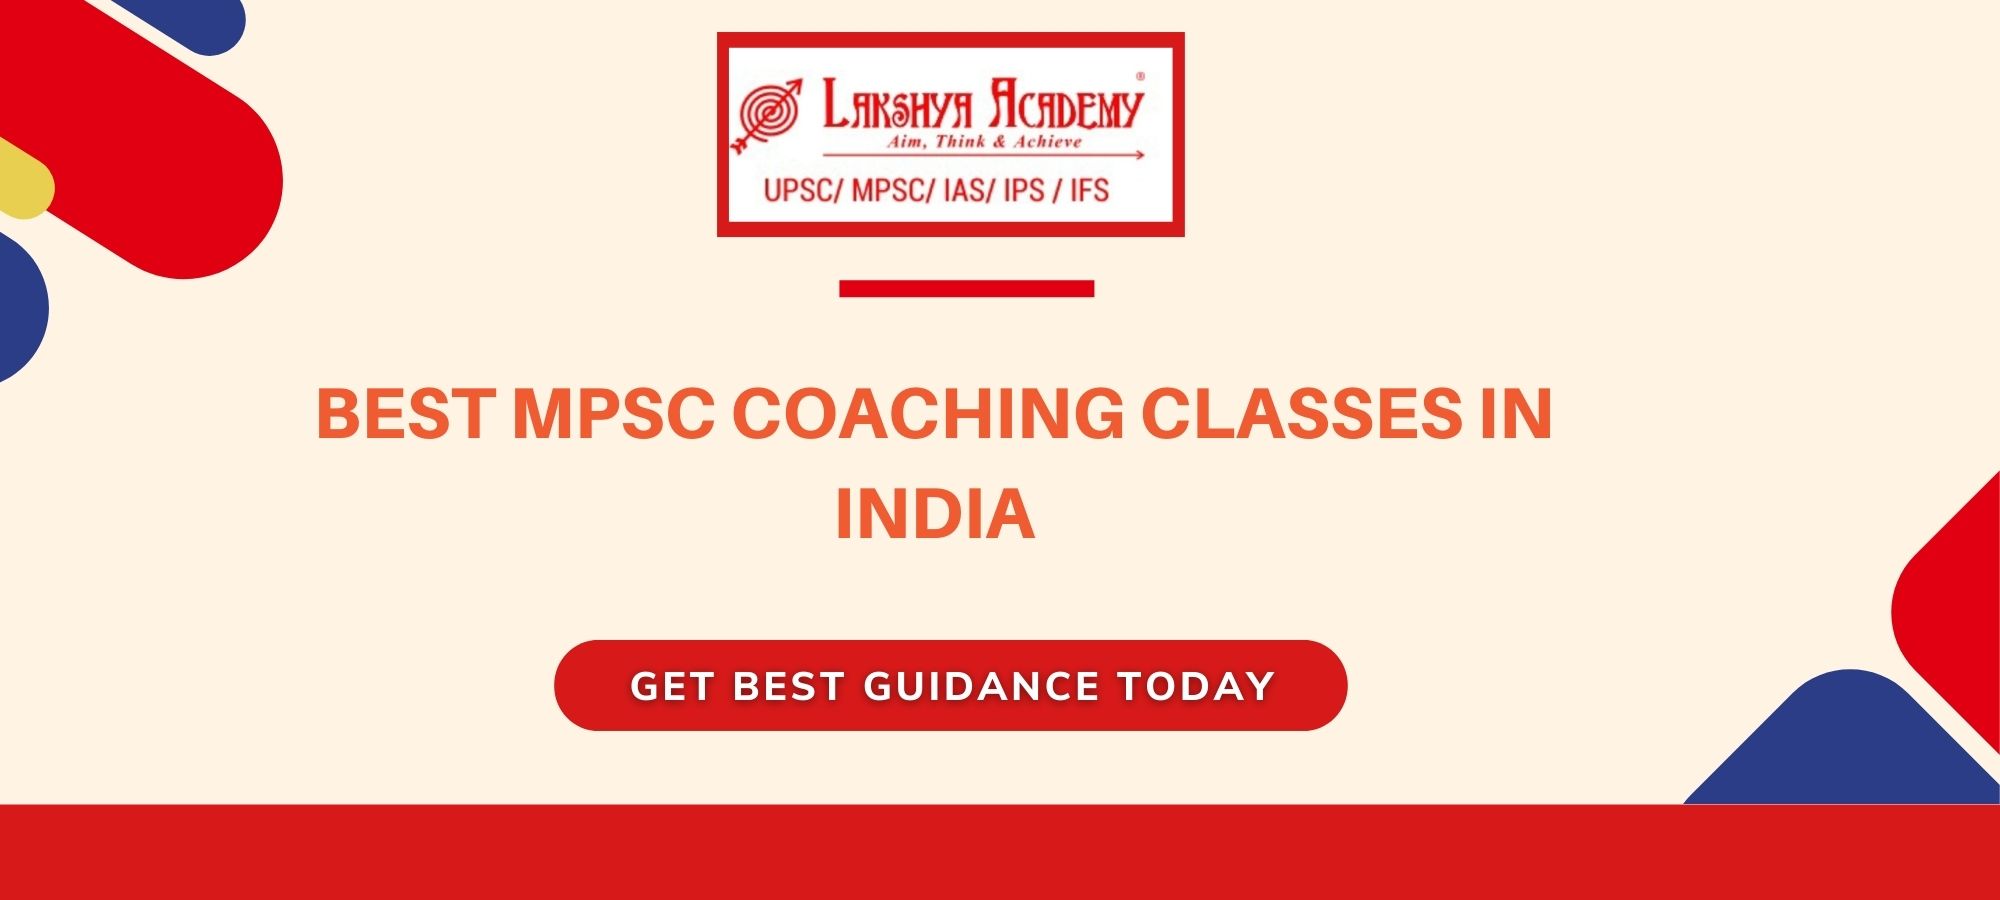 Best MPSC Coaching Classes In India | Best UPSC, IAS, MPSC Coaching Classes In Mumbai